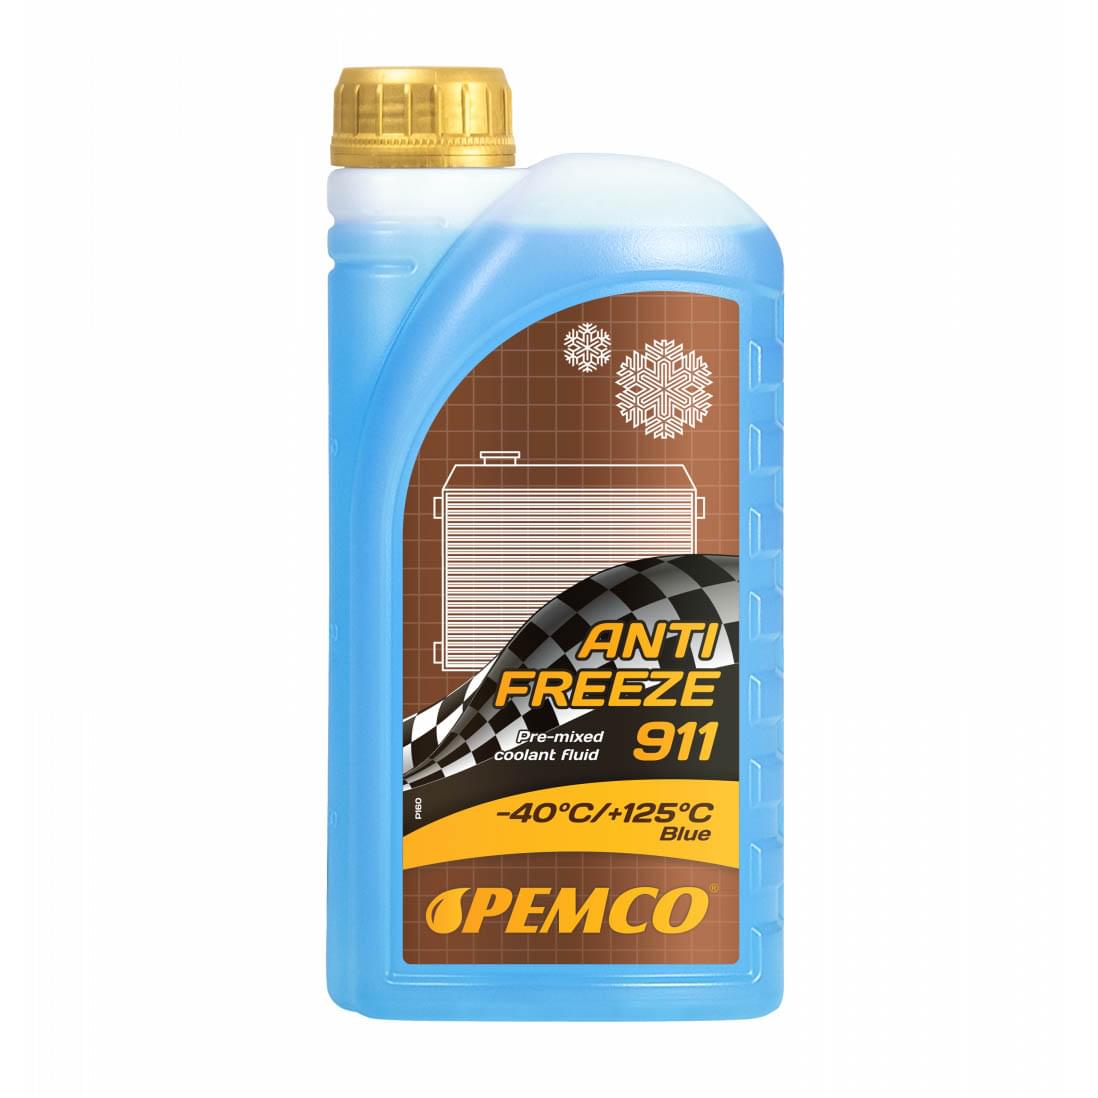 PEMCO Antifreeze 911 (-40°C) MΠΛΕ 1L